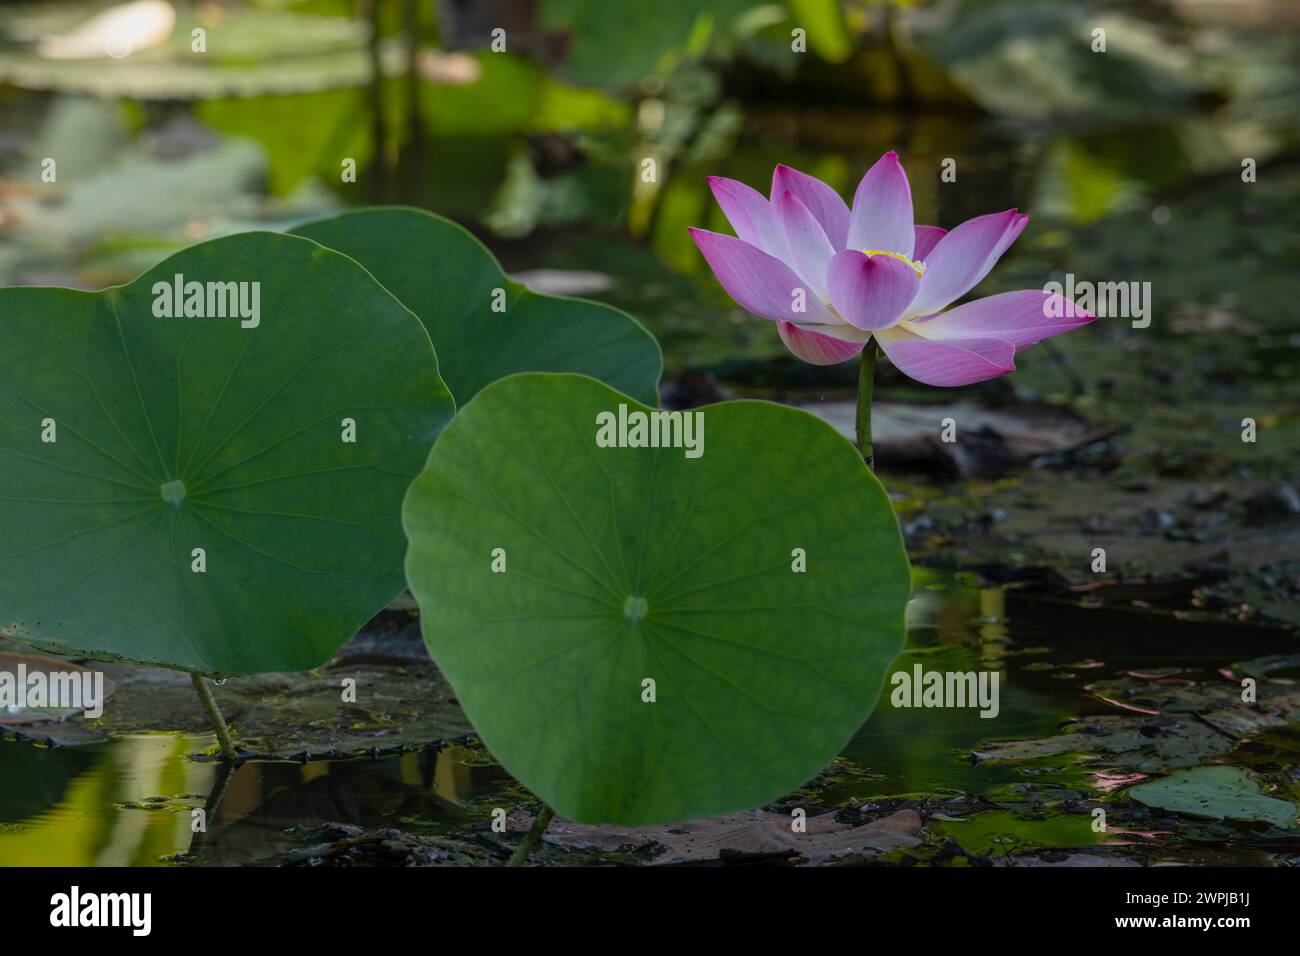 lotus, the national flower of Vietnam Stock Photo